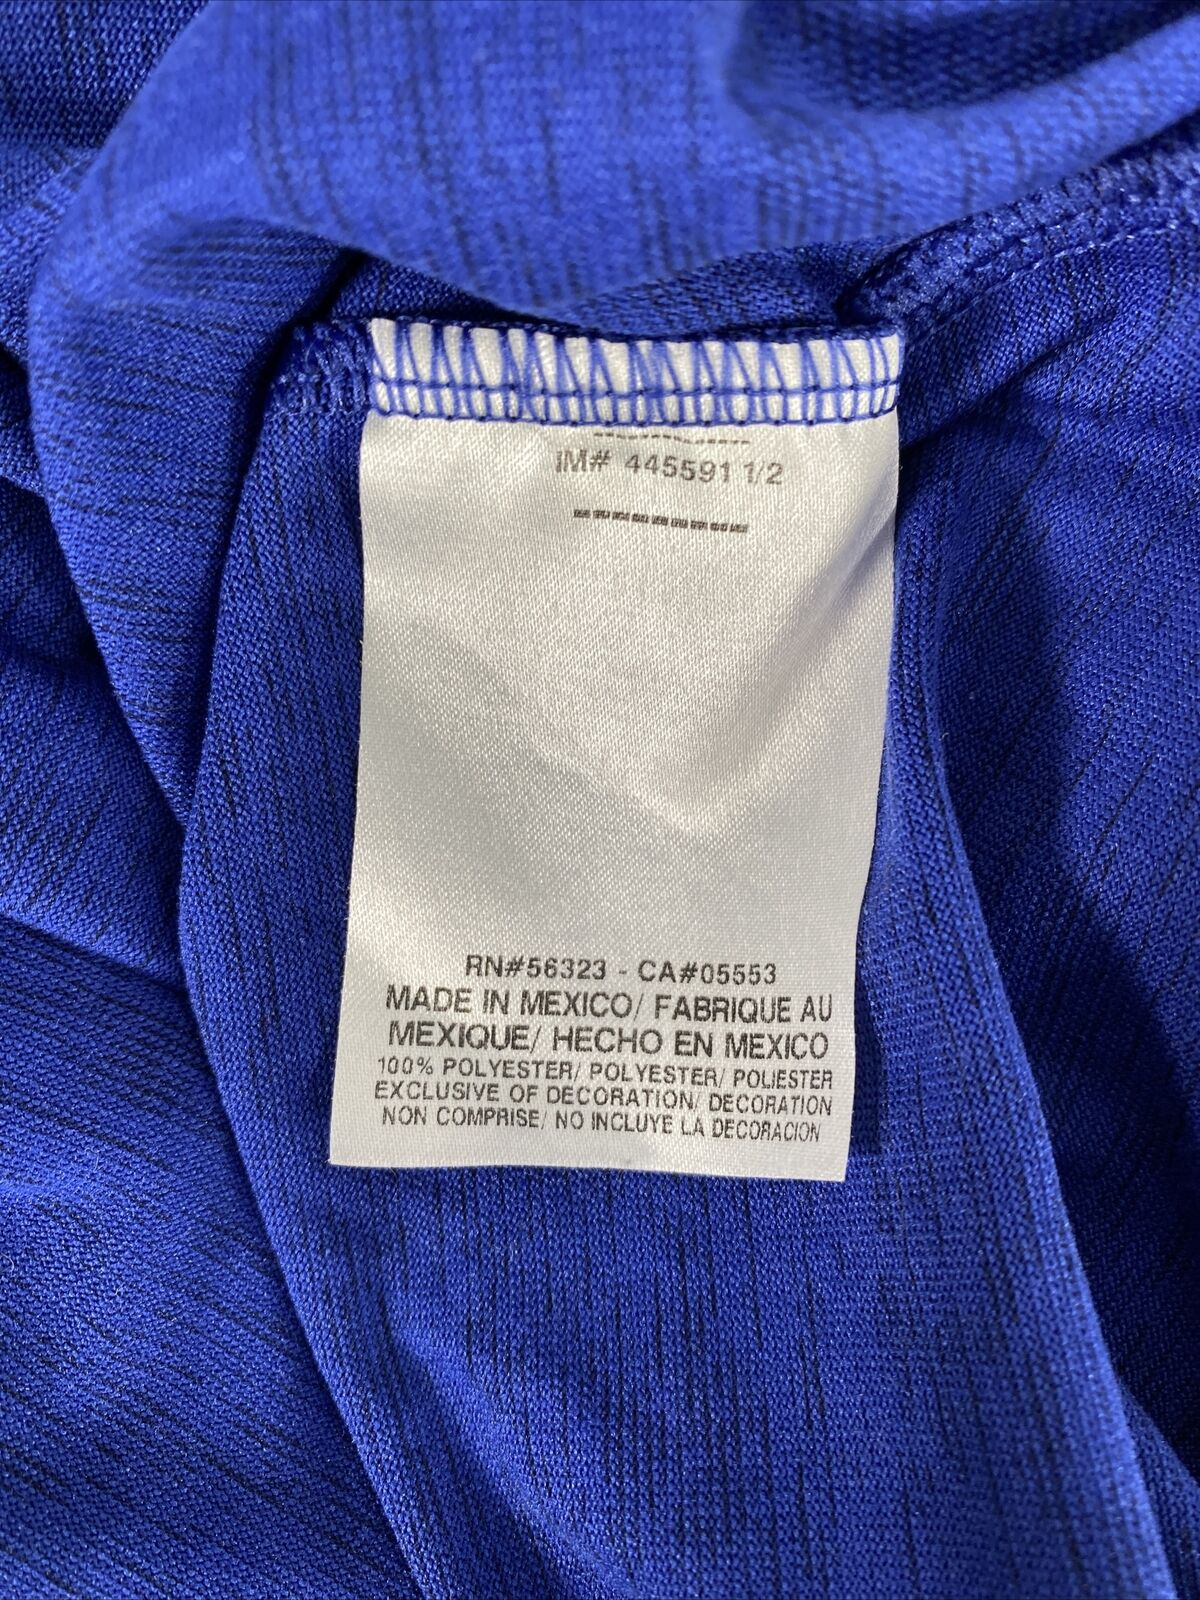 Nike Men's Blue Polyester Dri-Fit Short Sleeve Athletic Shirt - L